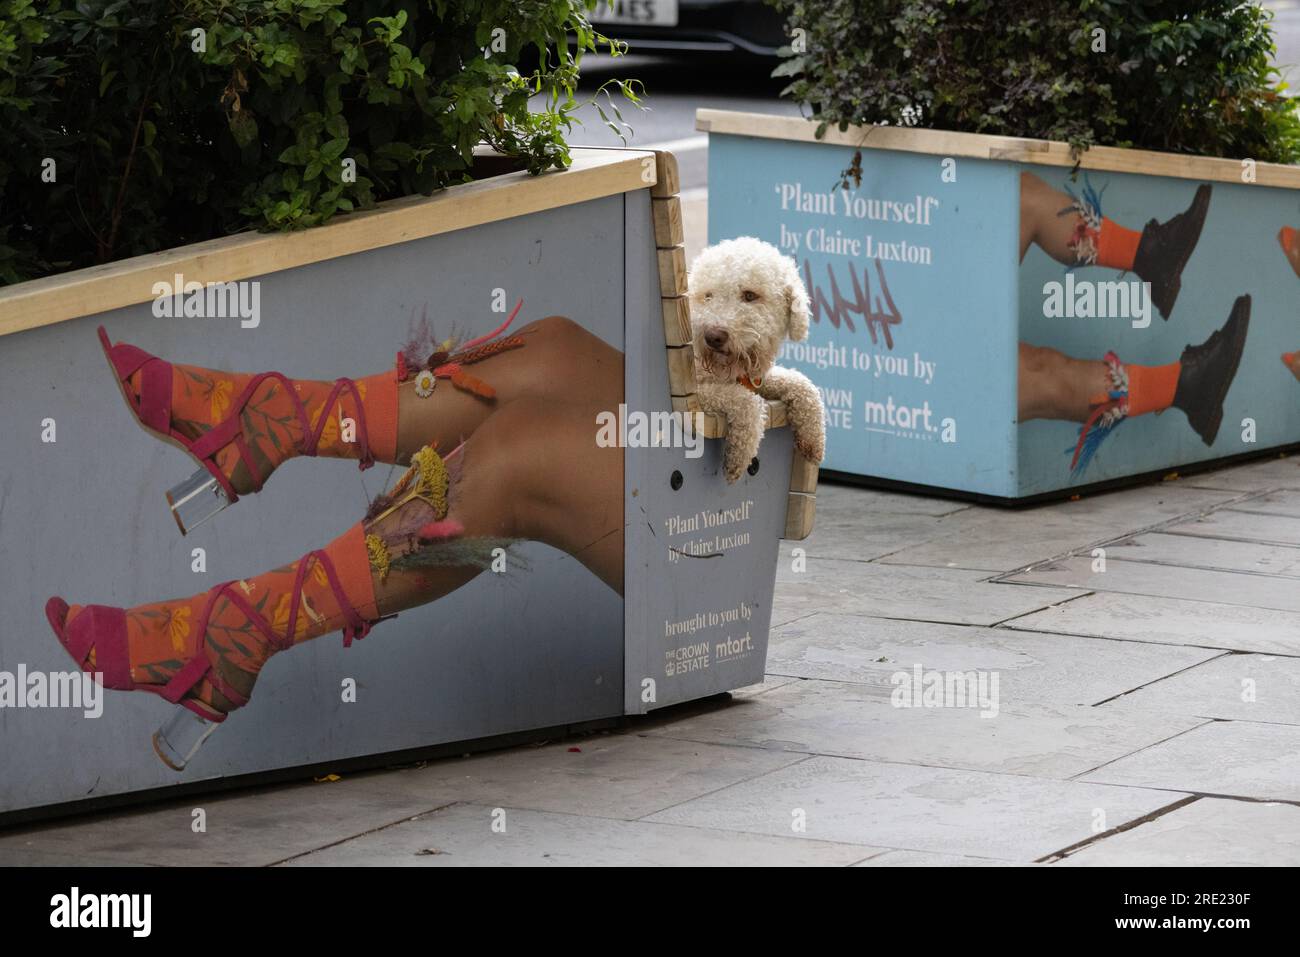 Cuddly dog sits on a street bench along Regent Street, London, England, United Kingdom Stock Photo